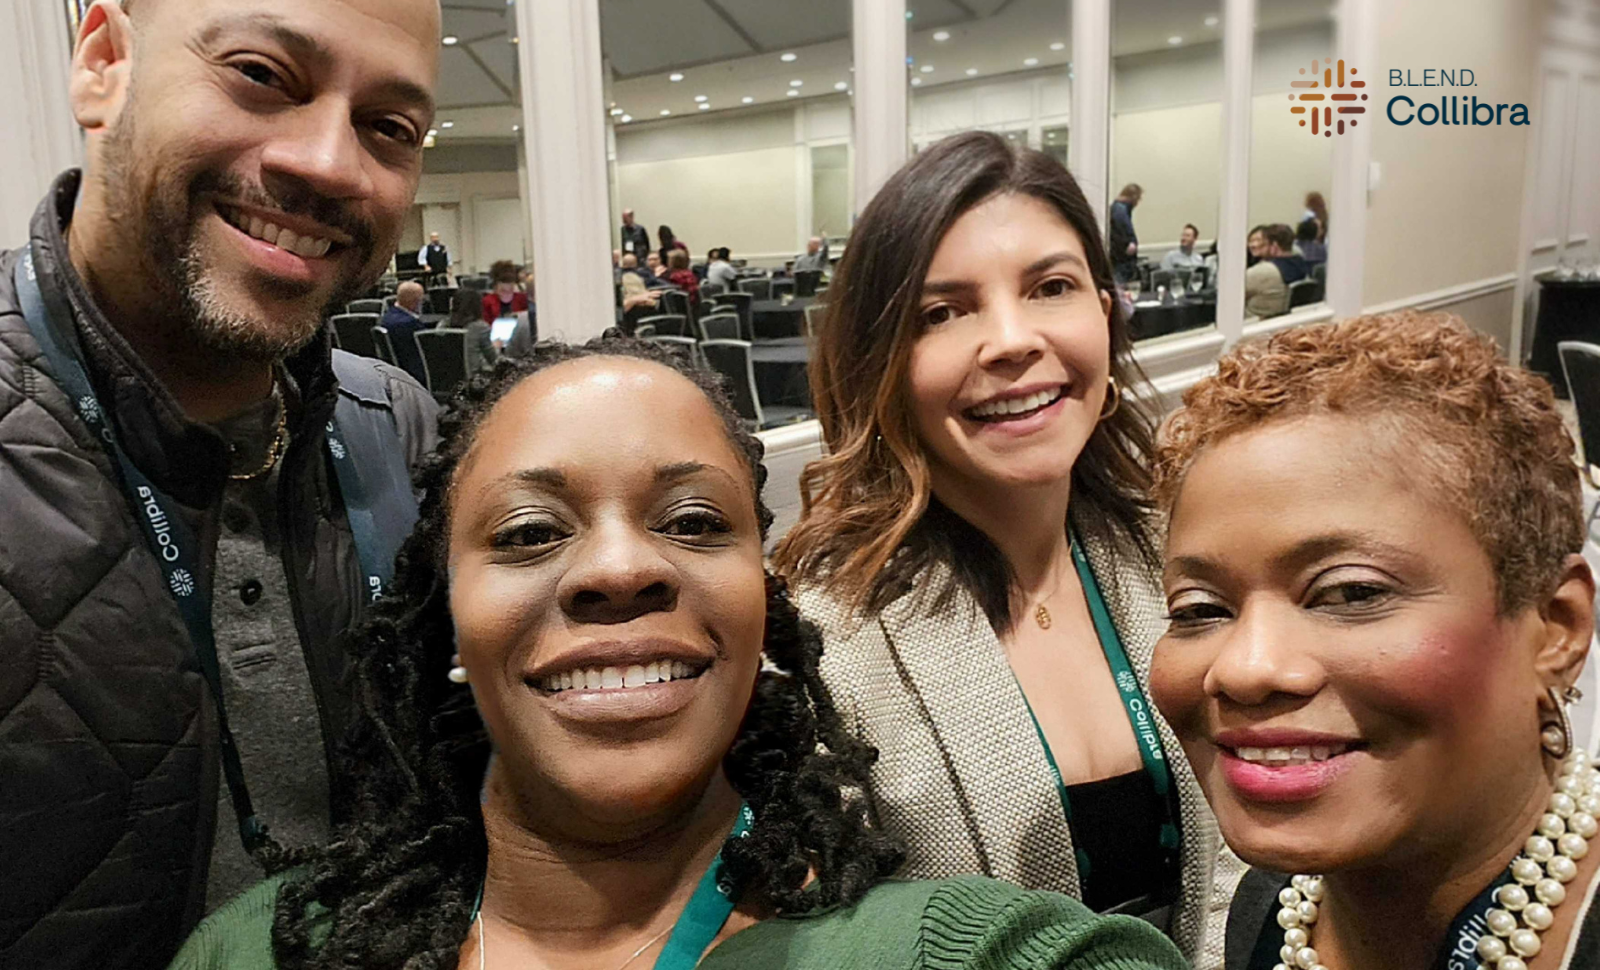 Collibra BLEND社区新万博移动客户端的四位领导人，包括博客作者帕梅拉·琼斯(Pamela Jones)，在照片中微笑着。